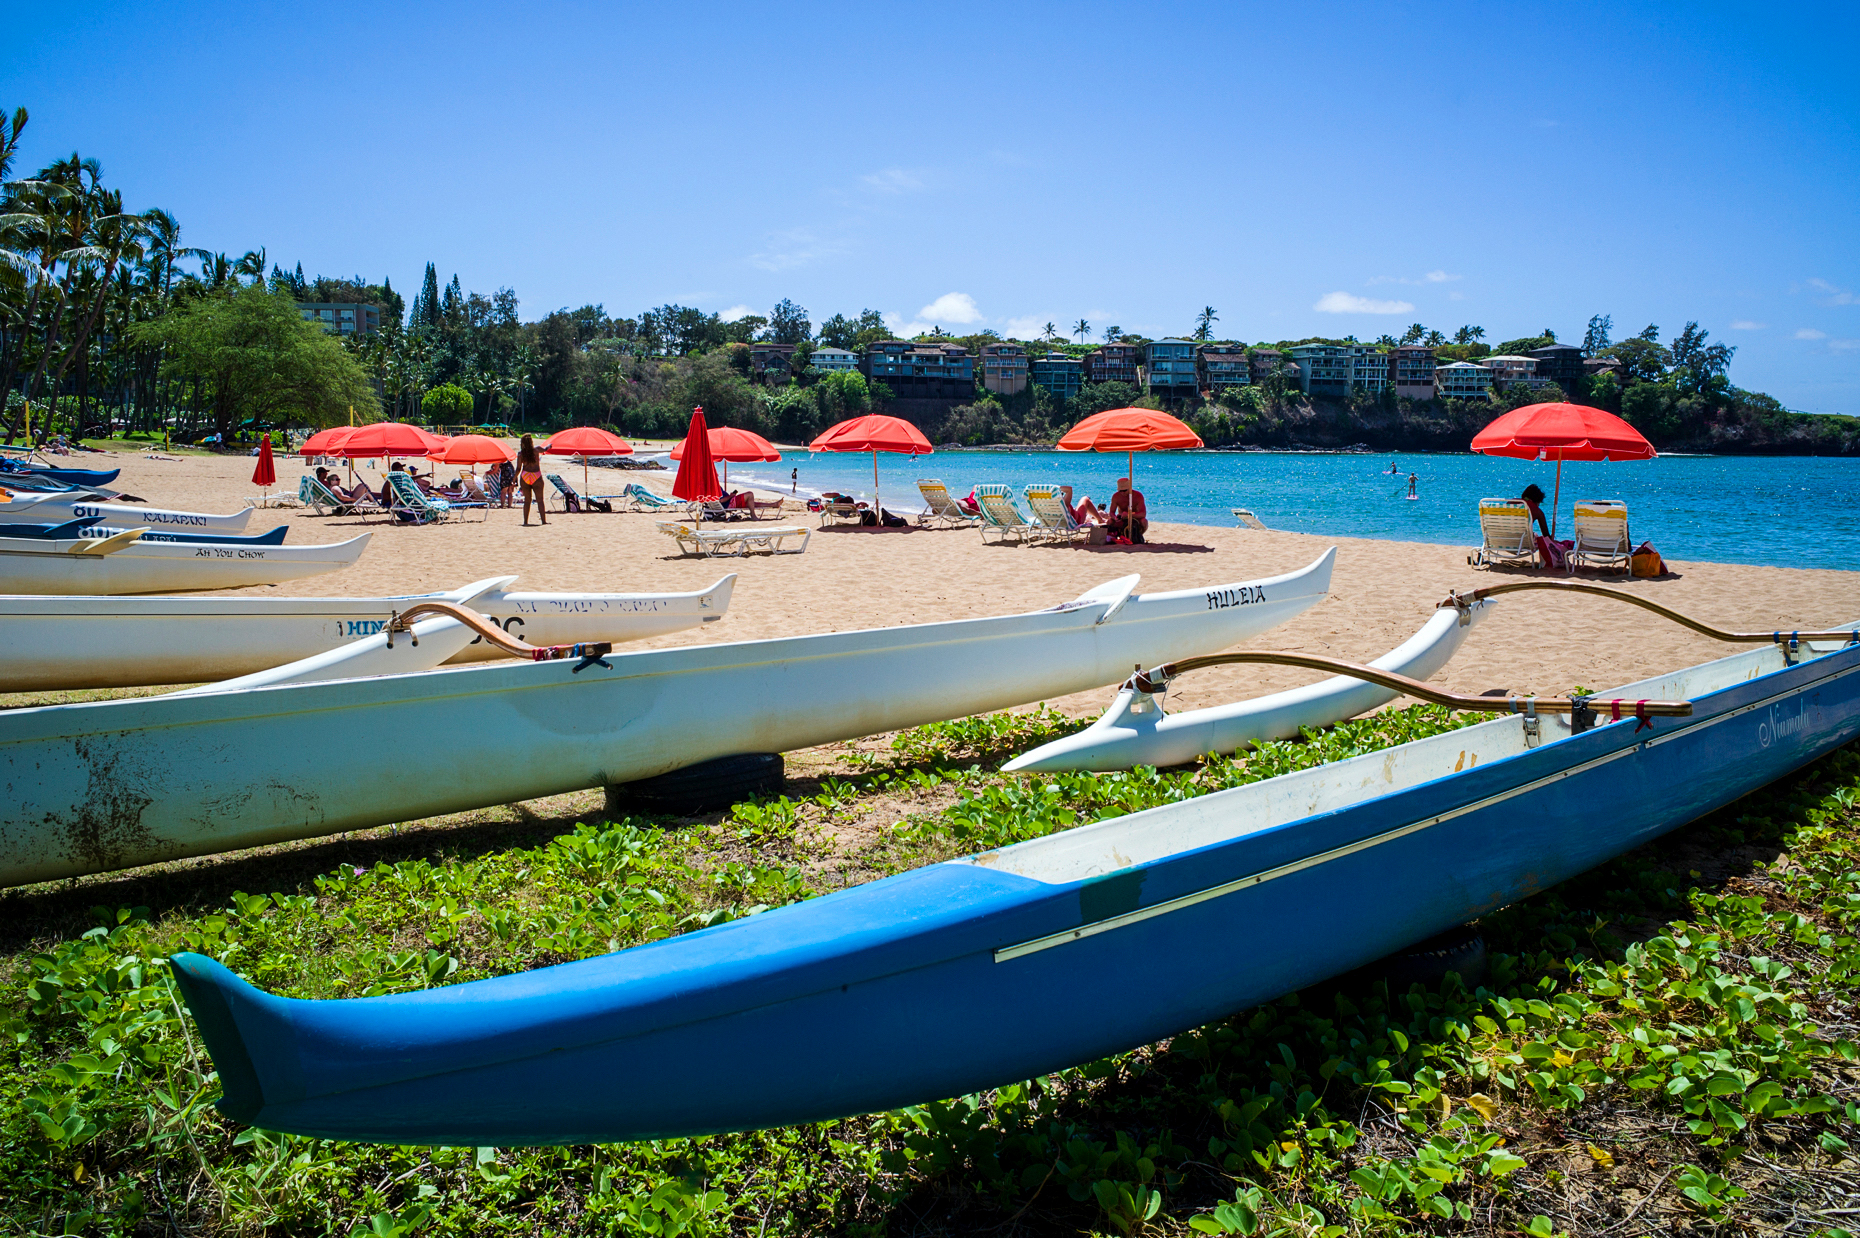 Outrigger canoes on the beach, Kaua’i Marriott Resort; Kalapaki Bay, Kaua